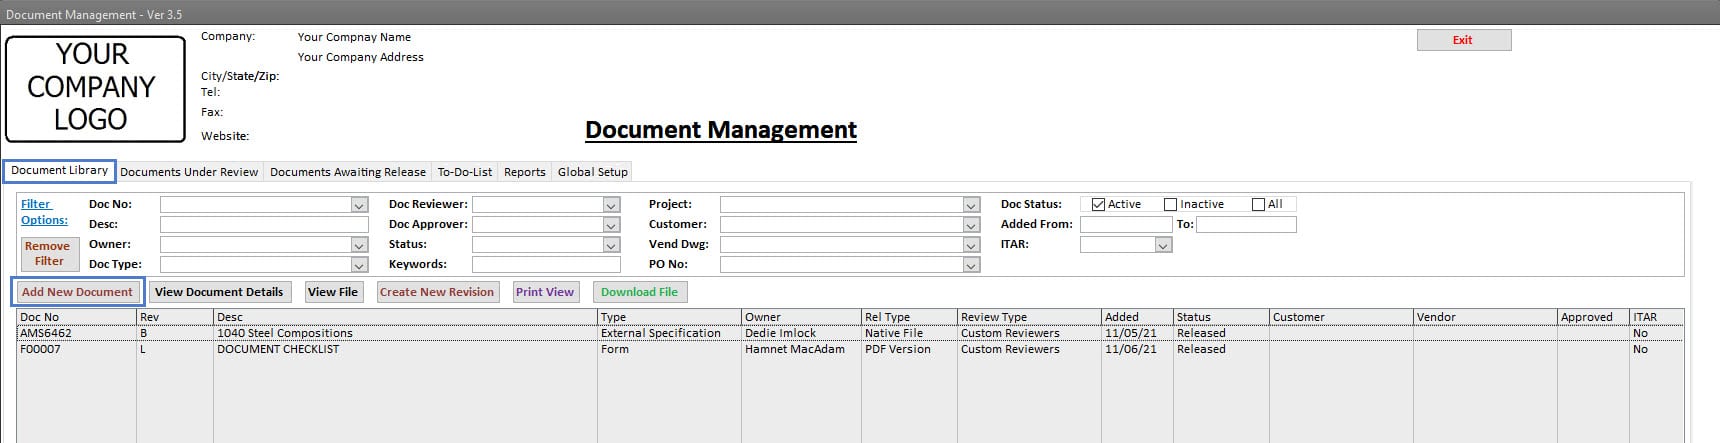 Document Management Add Document